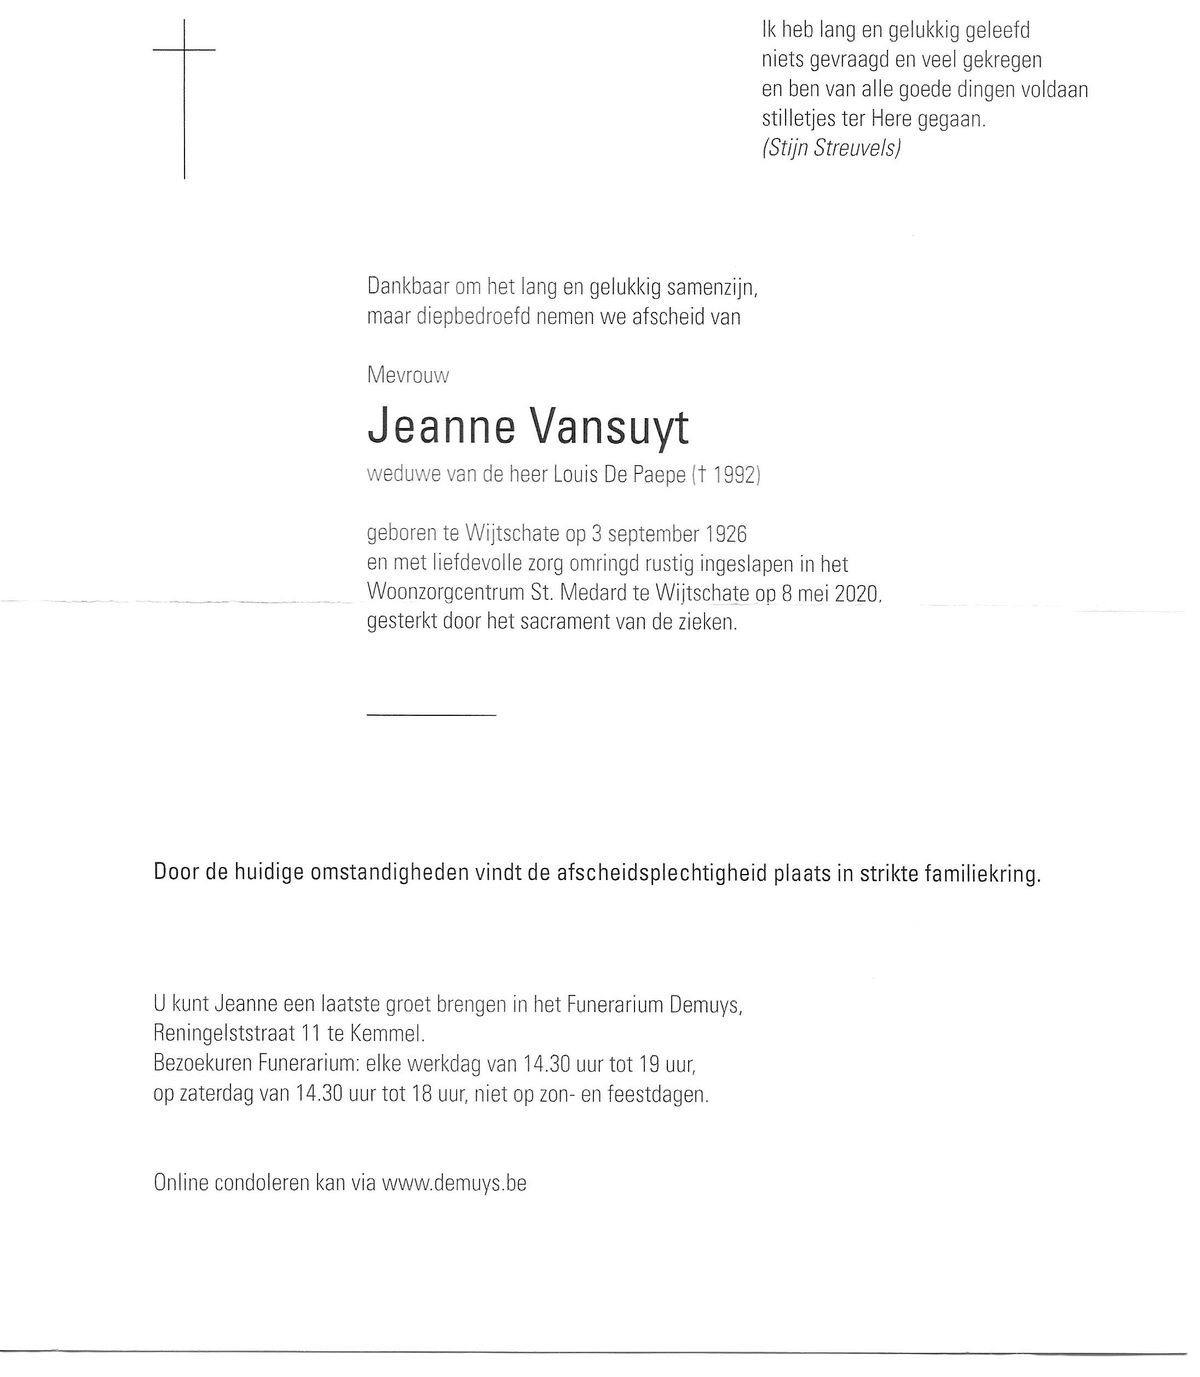 Jeanne VANSUYT 08/05/2020